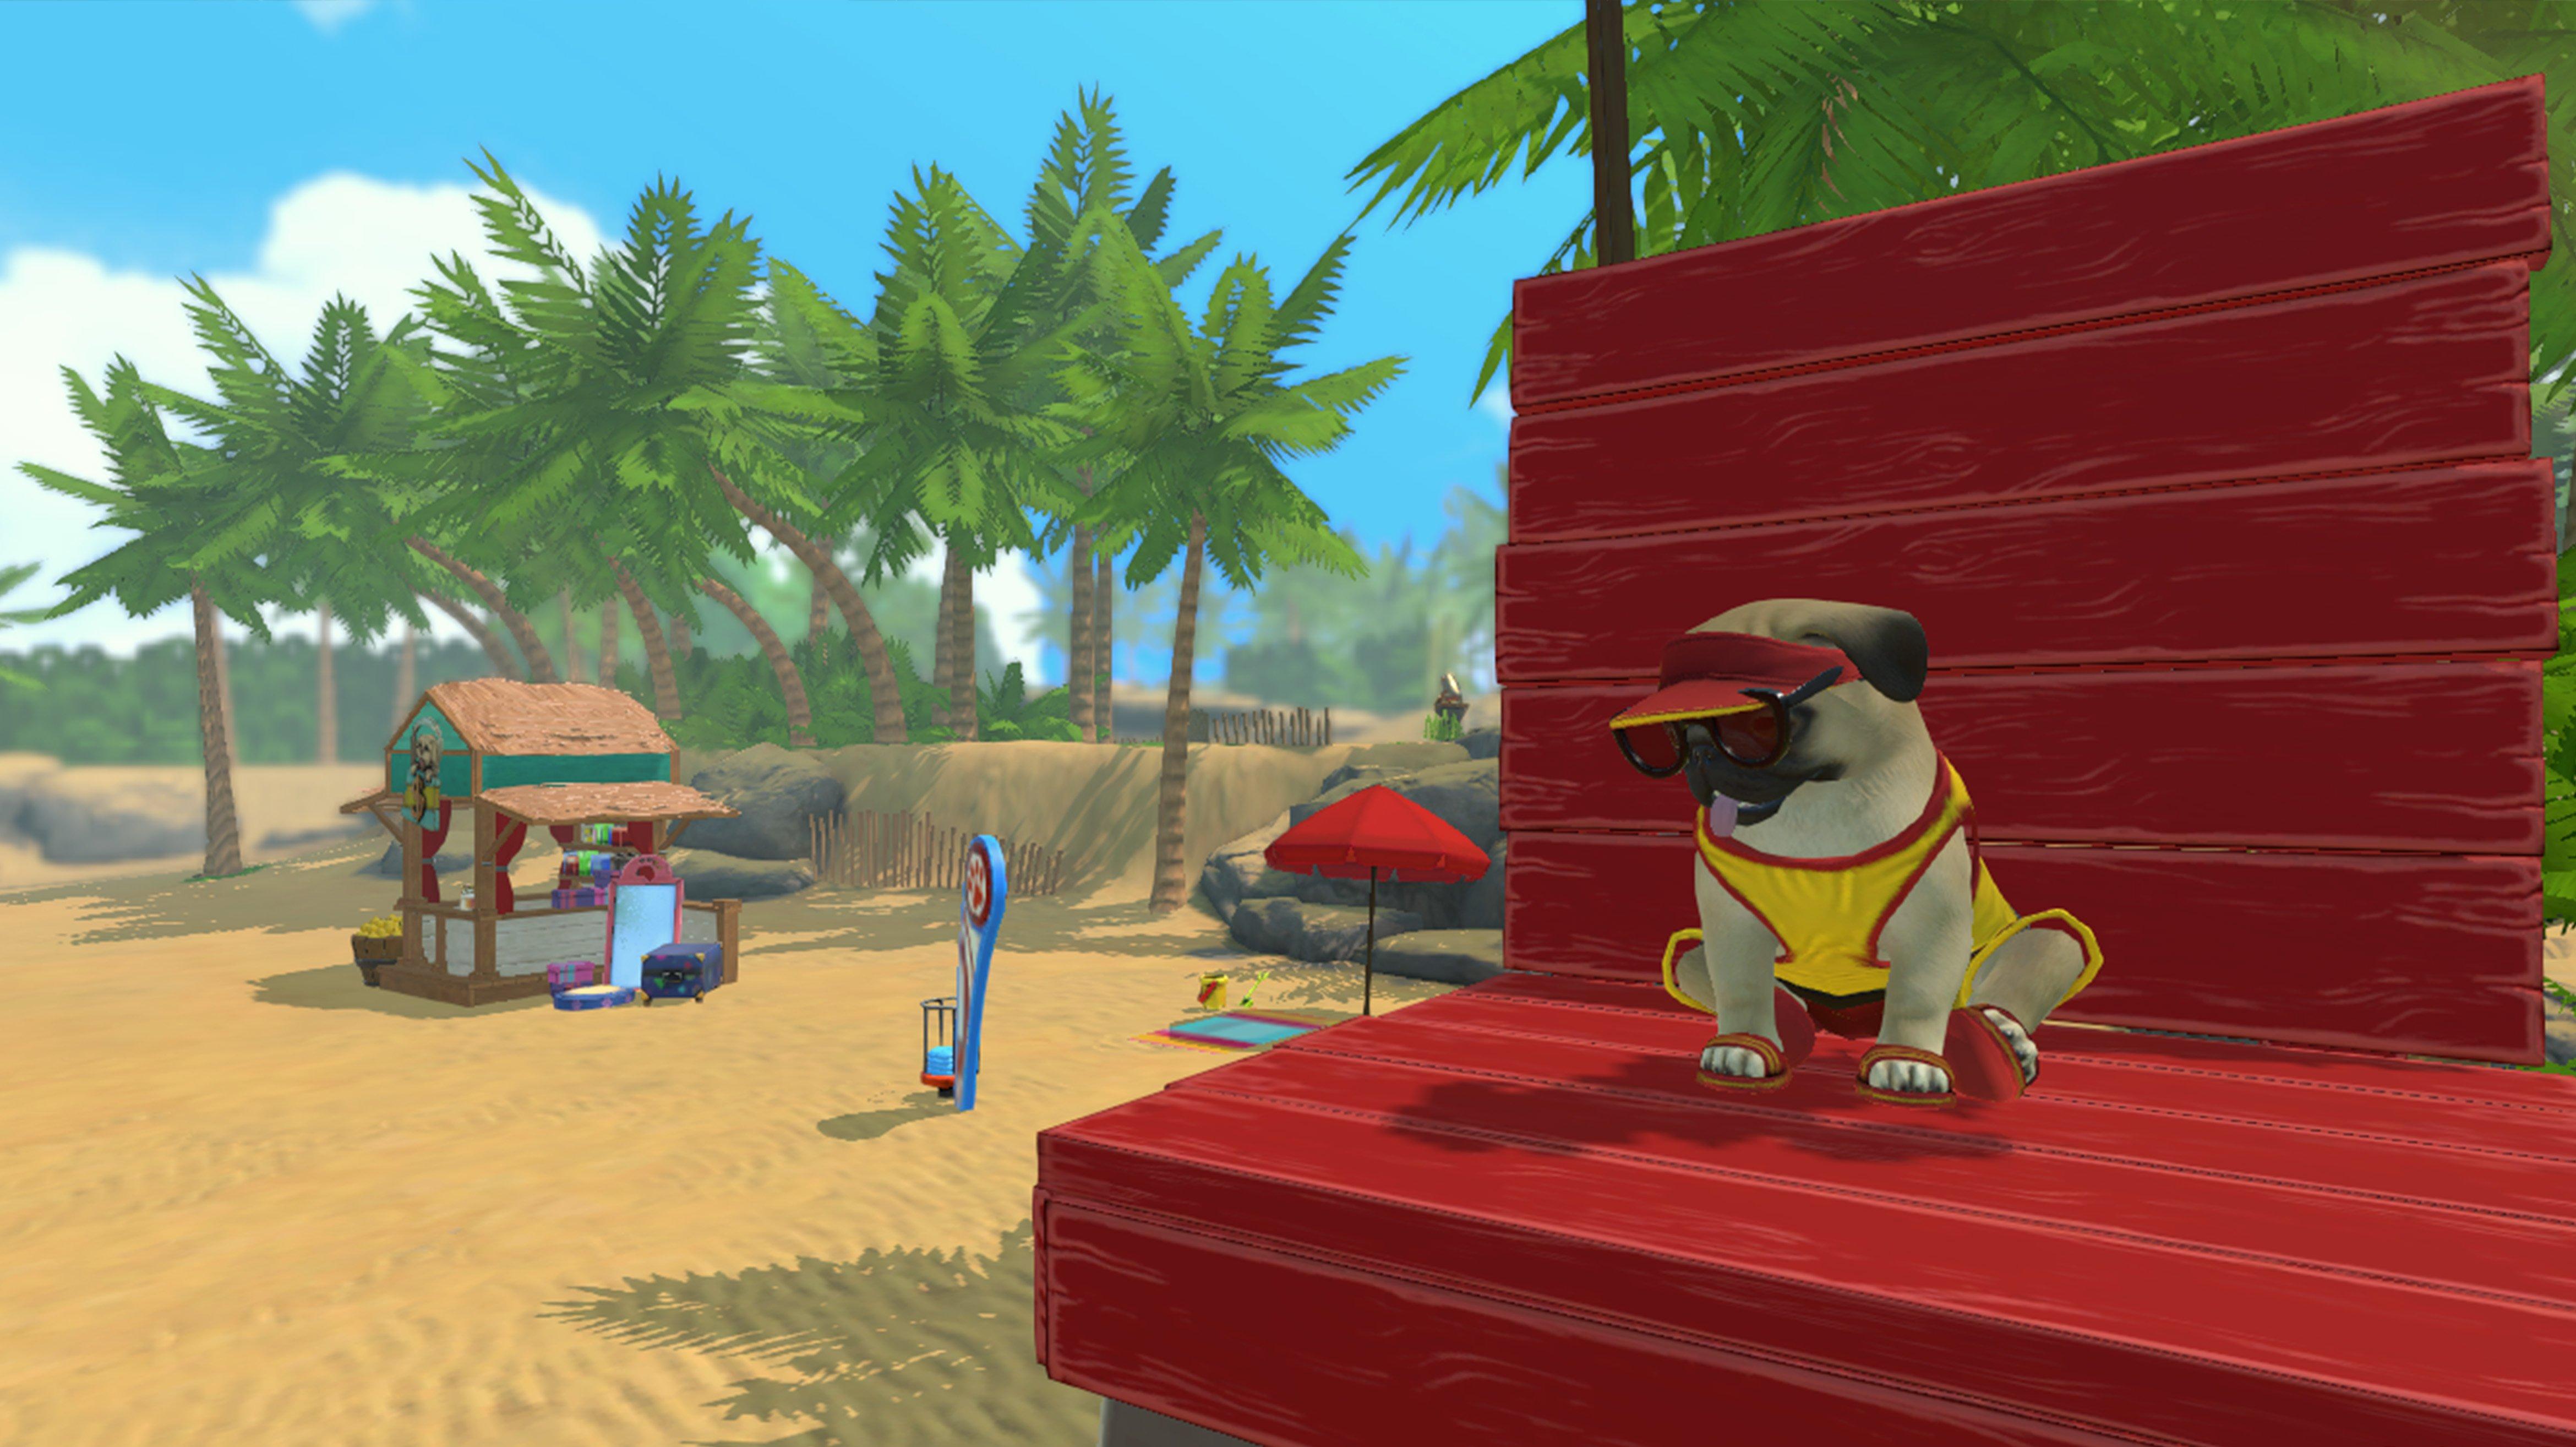 Little Friends: Puppy Island Gamestop Exclusive - Nintendo Switch